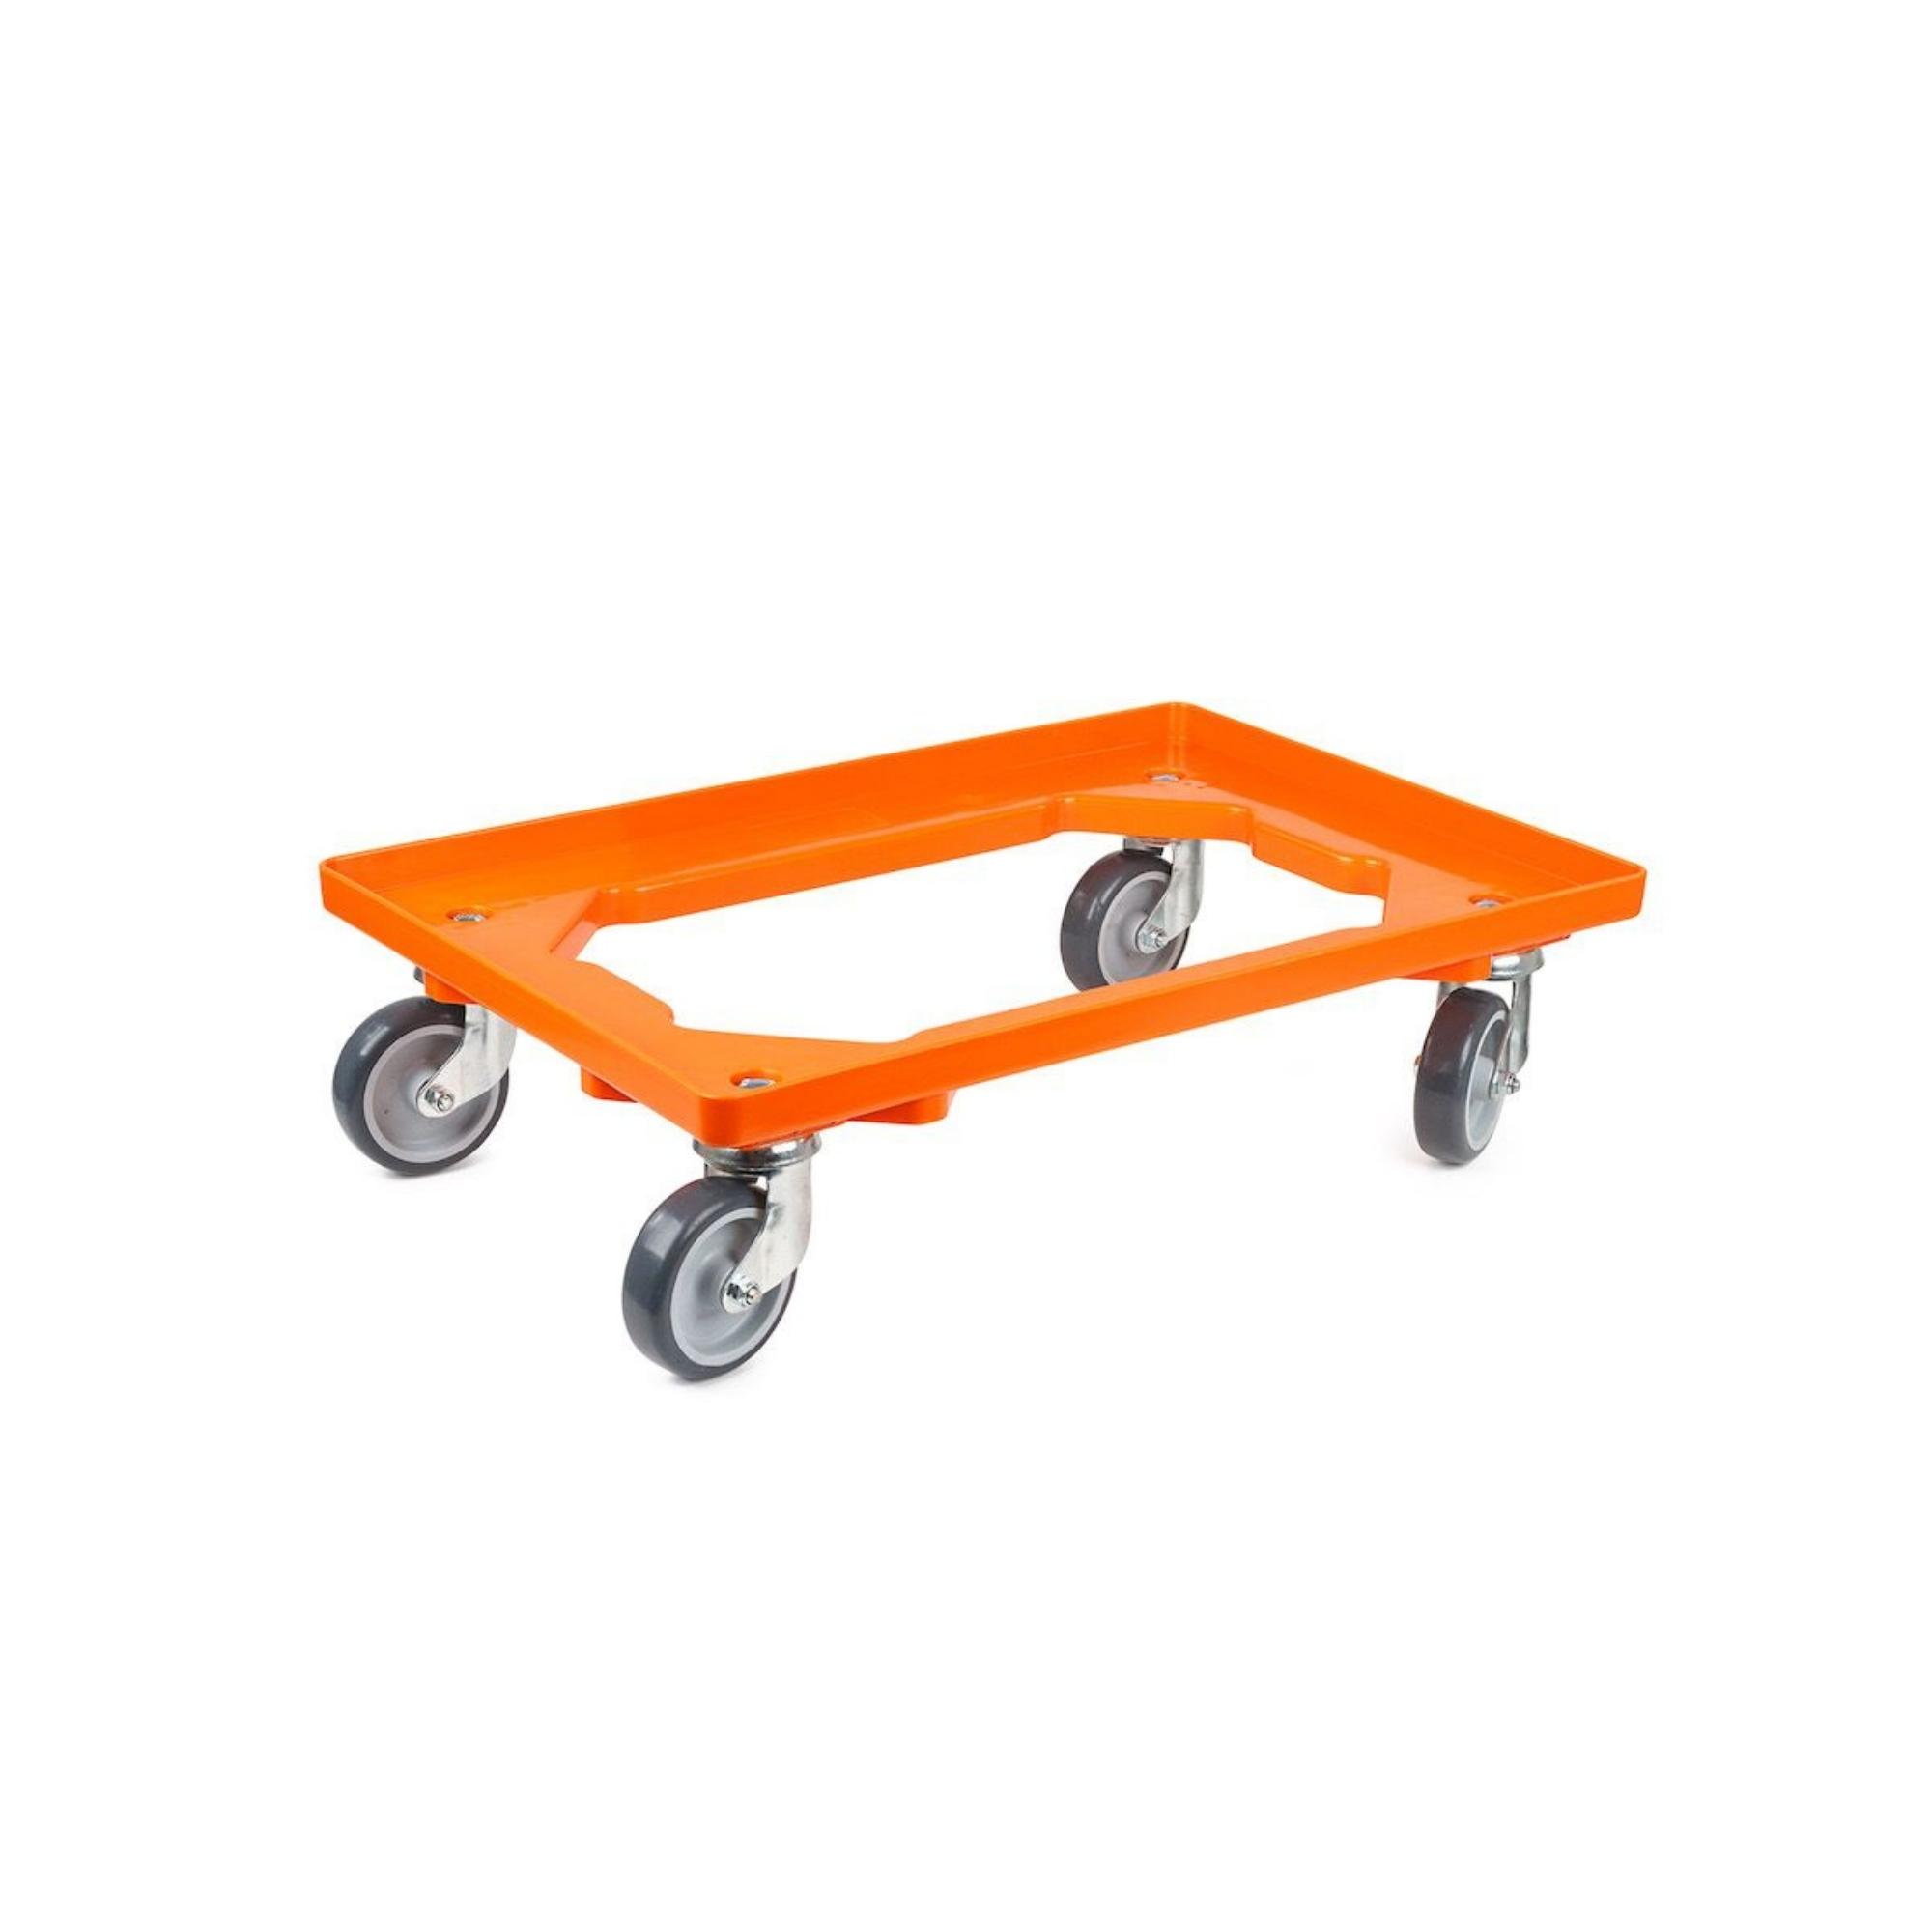 SparSet 2x Transportroller für Euroboxen 60x40cm mit Gummiräder orange | Offenes Deck | 2 Lenkrollen & 2 Bockrollen | Traglast 300kg | Kistenroller Logistikroller Rollwagen Profi-Fahrgestell